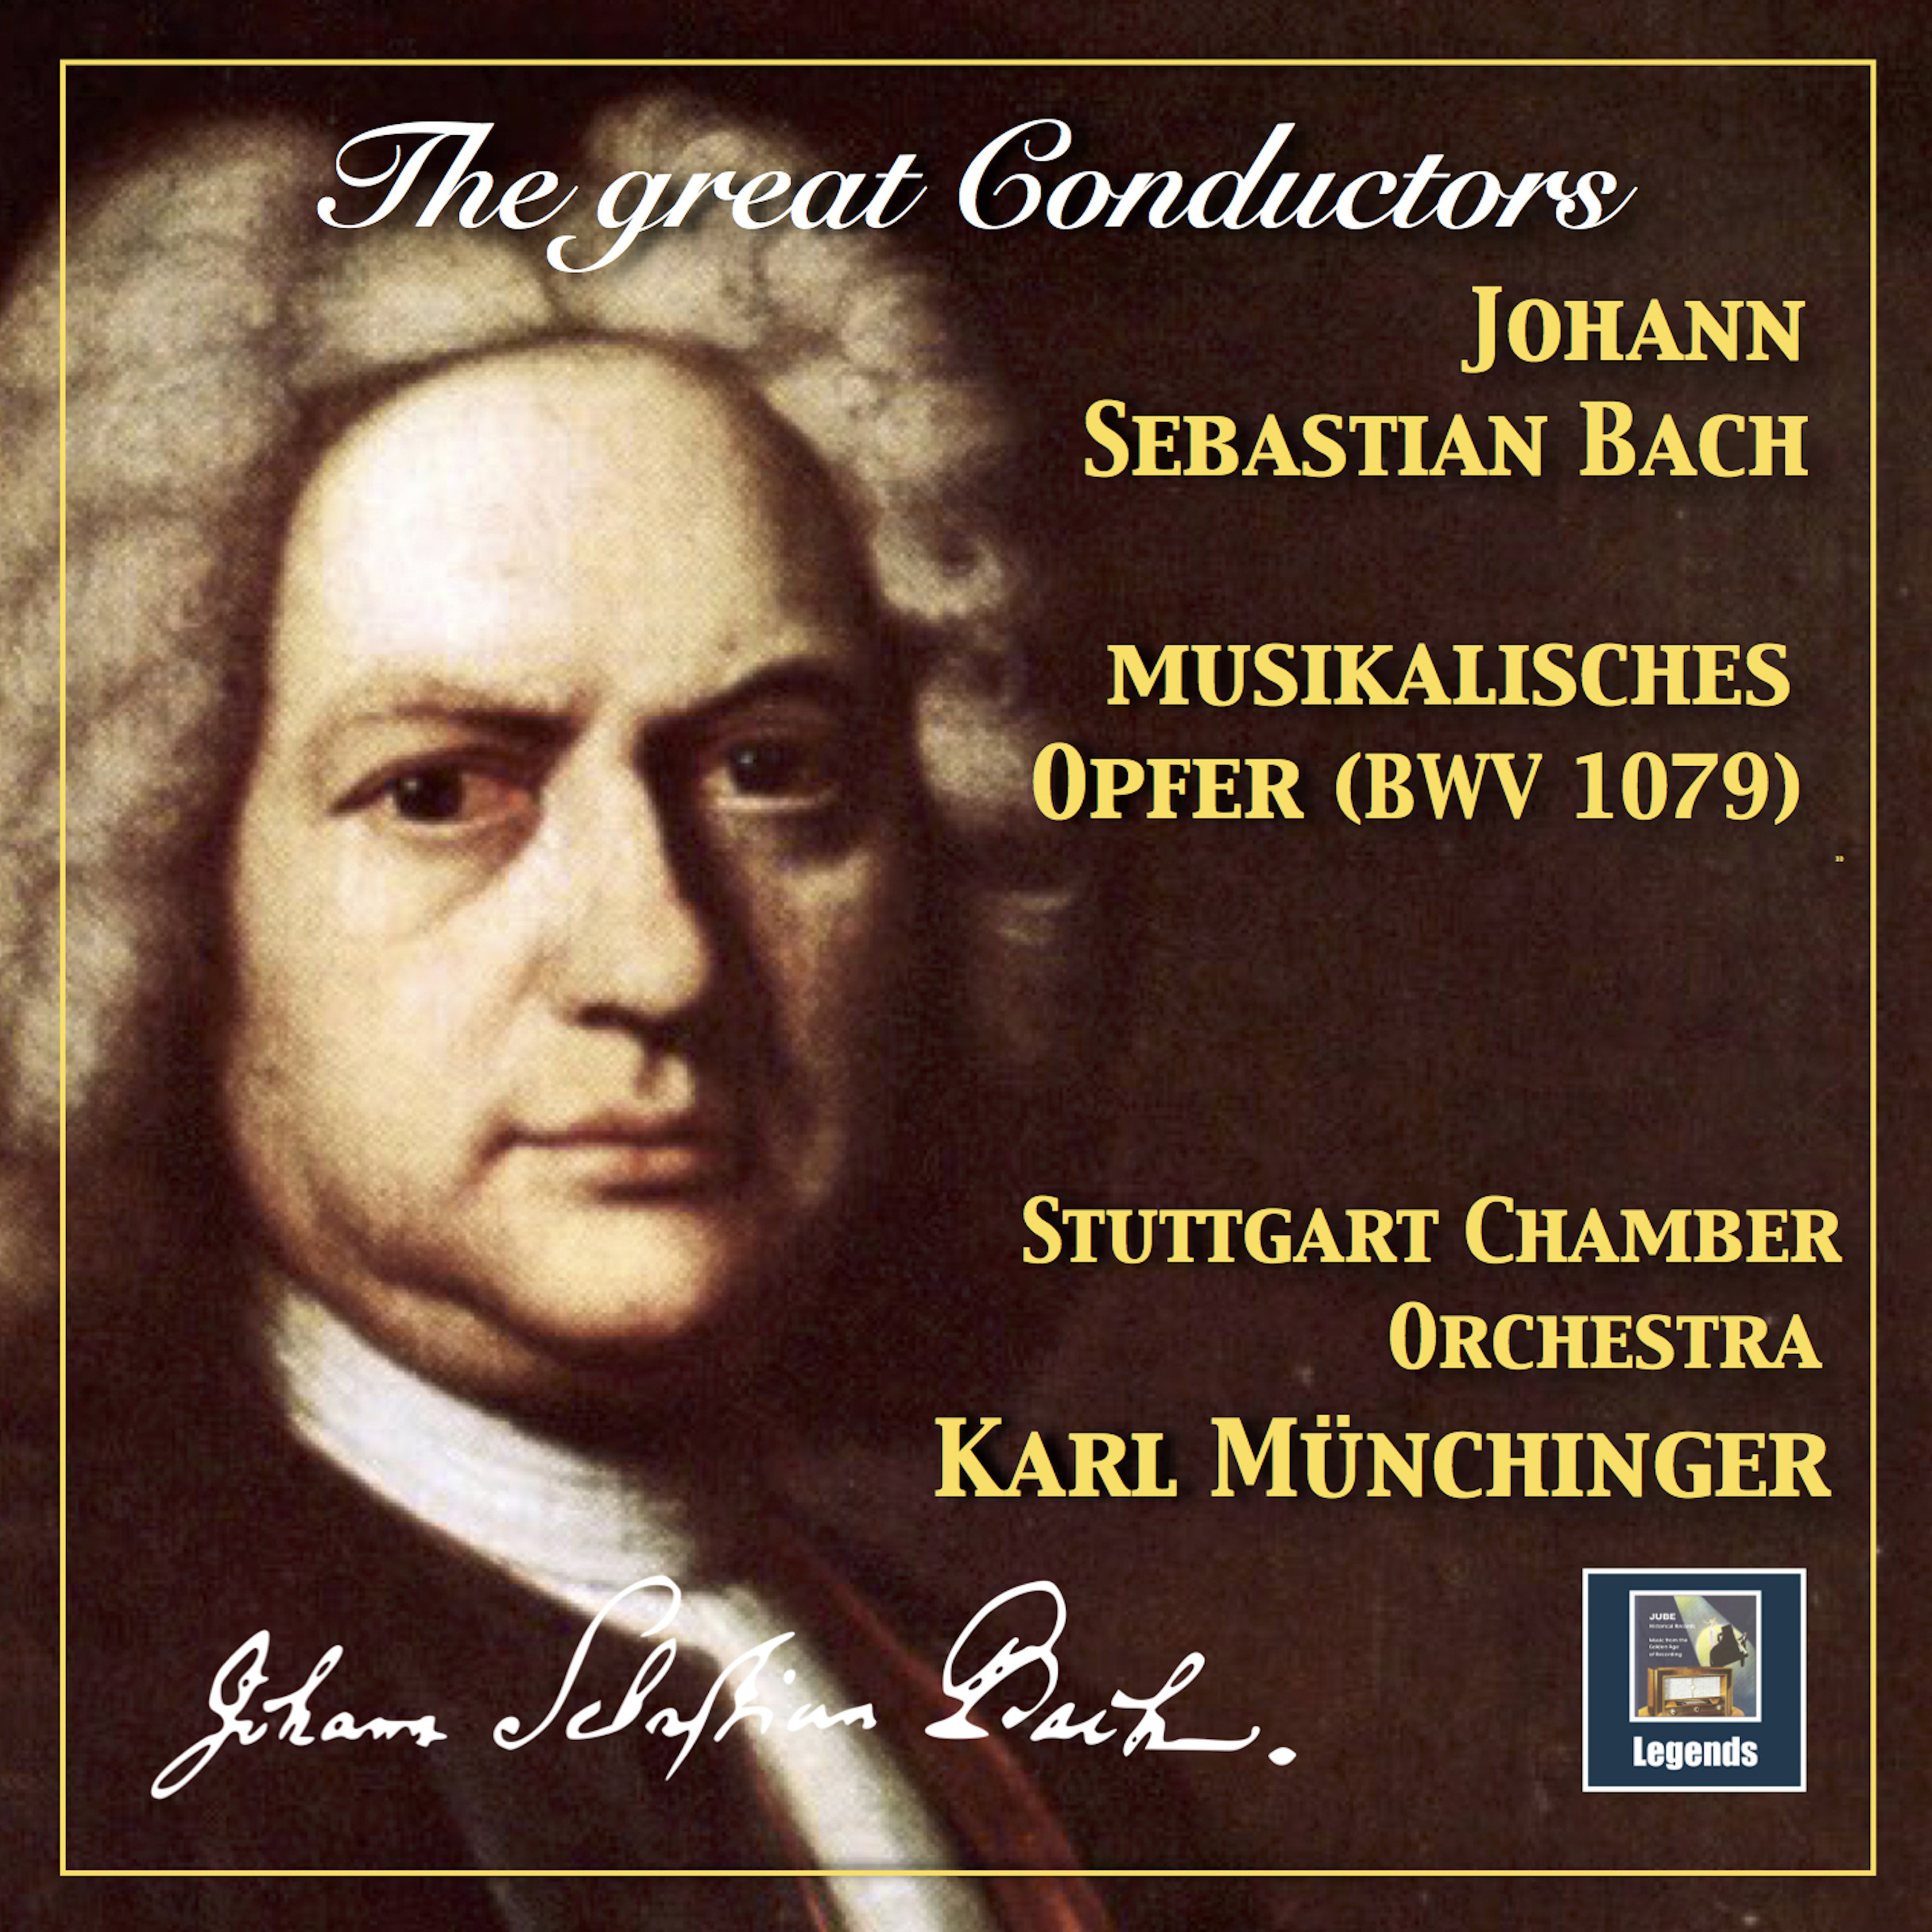 Musikalisches Opfer, BWV 1079 (Arr. K. Münchinger for Chamber Orchestra): Sonata à 3, Allegro [1]